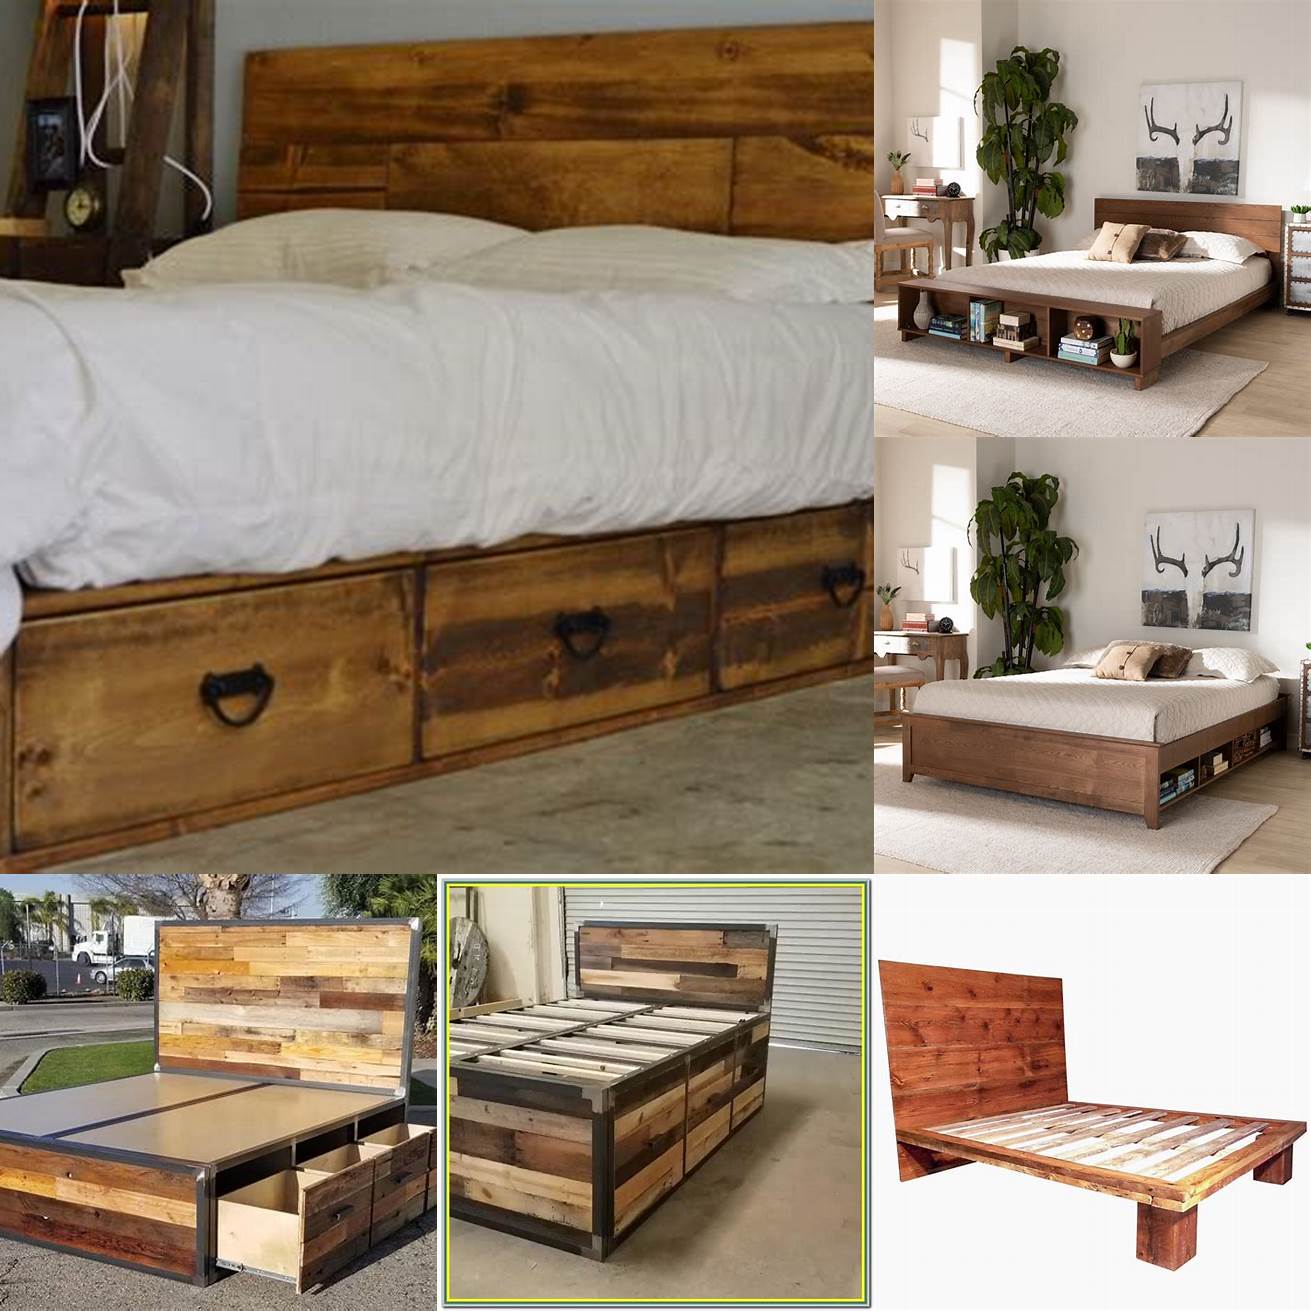 Platform bed storage made of reclaimed wood